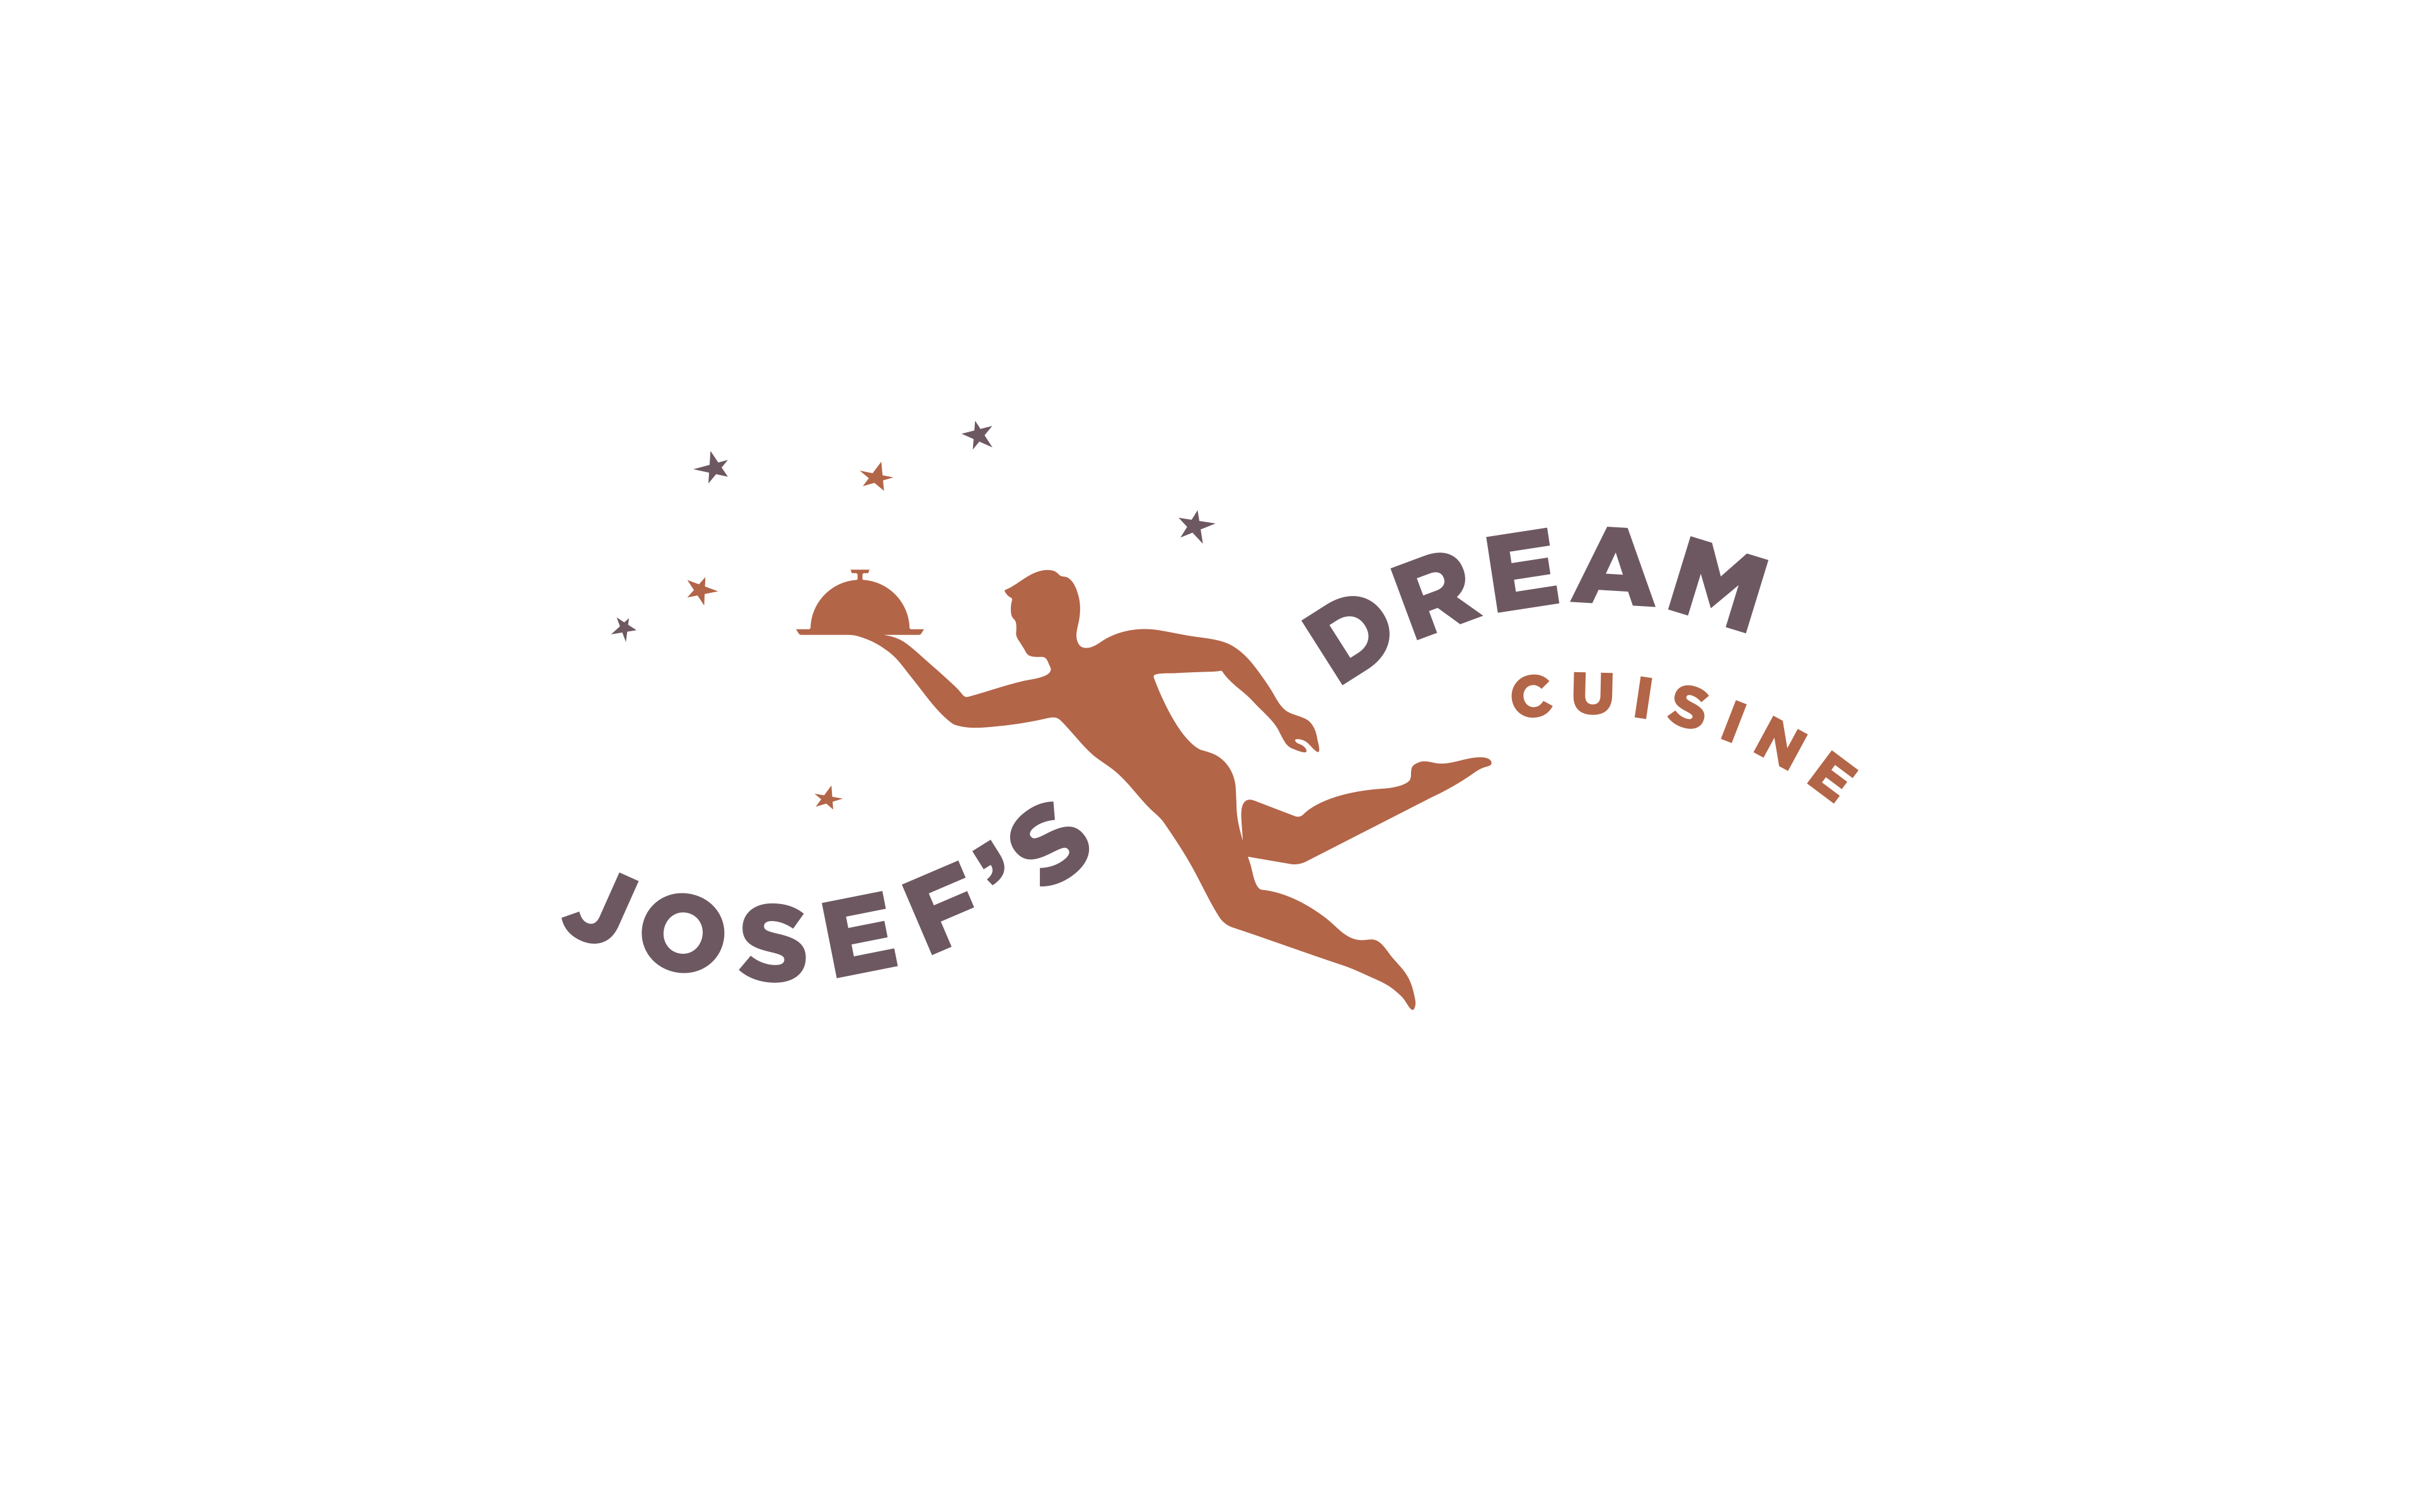 Josefs Dream